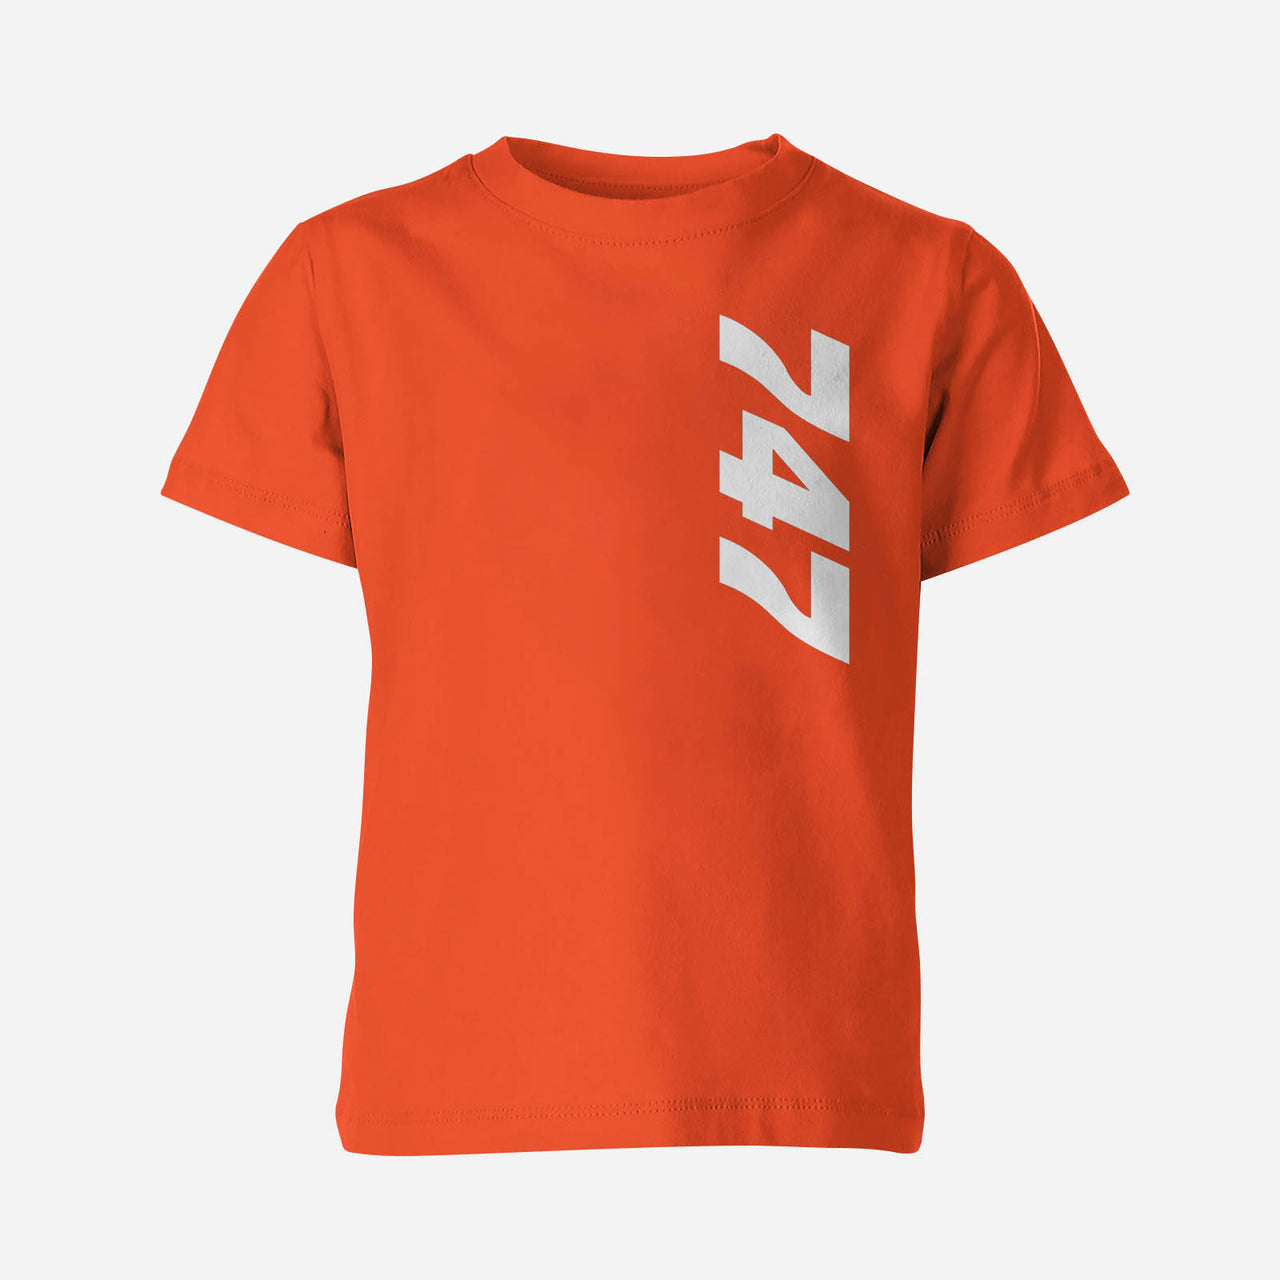 747 Side Text Designed Children T-Shirts